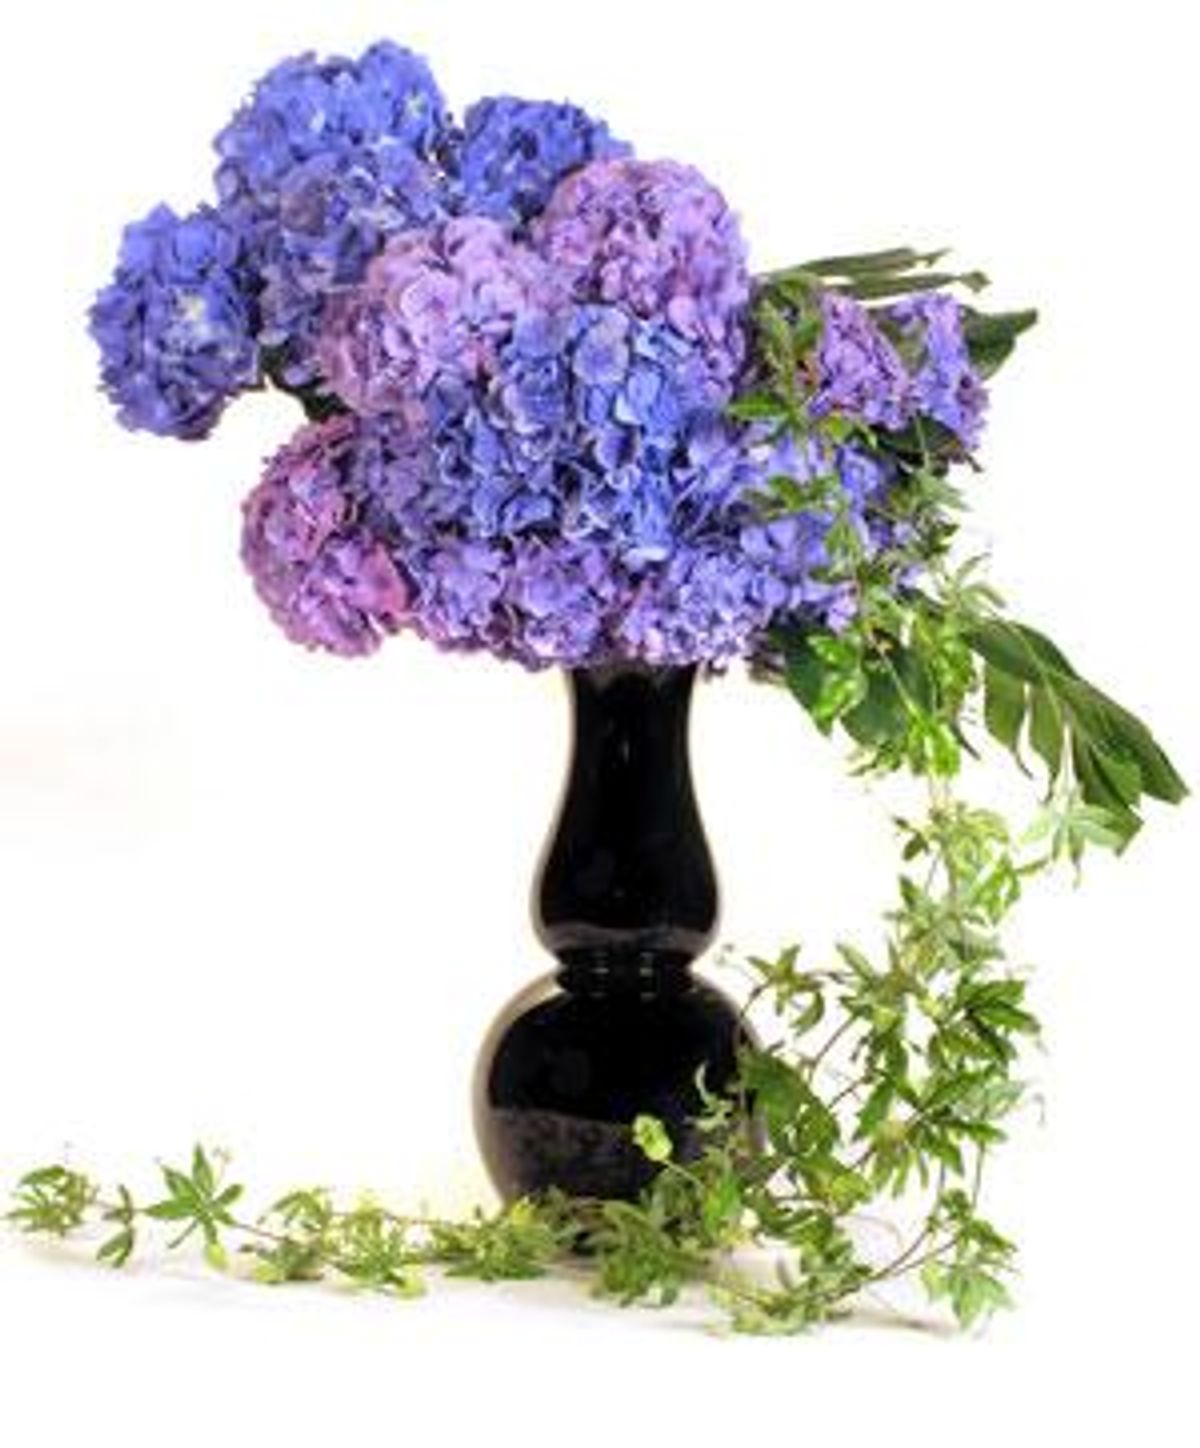 Detail_purpleflower